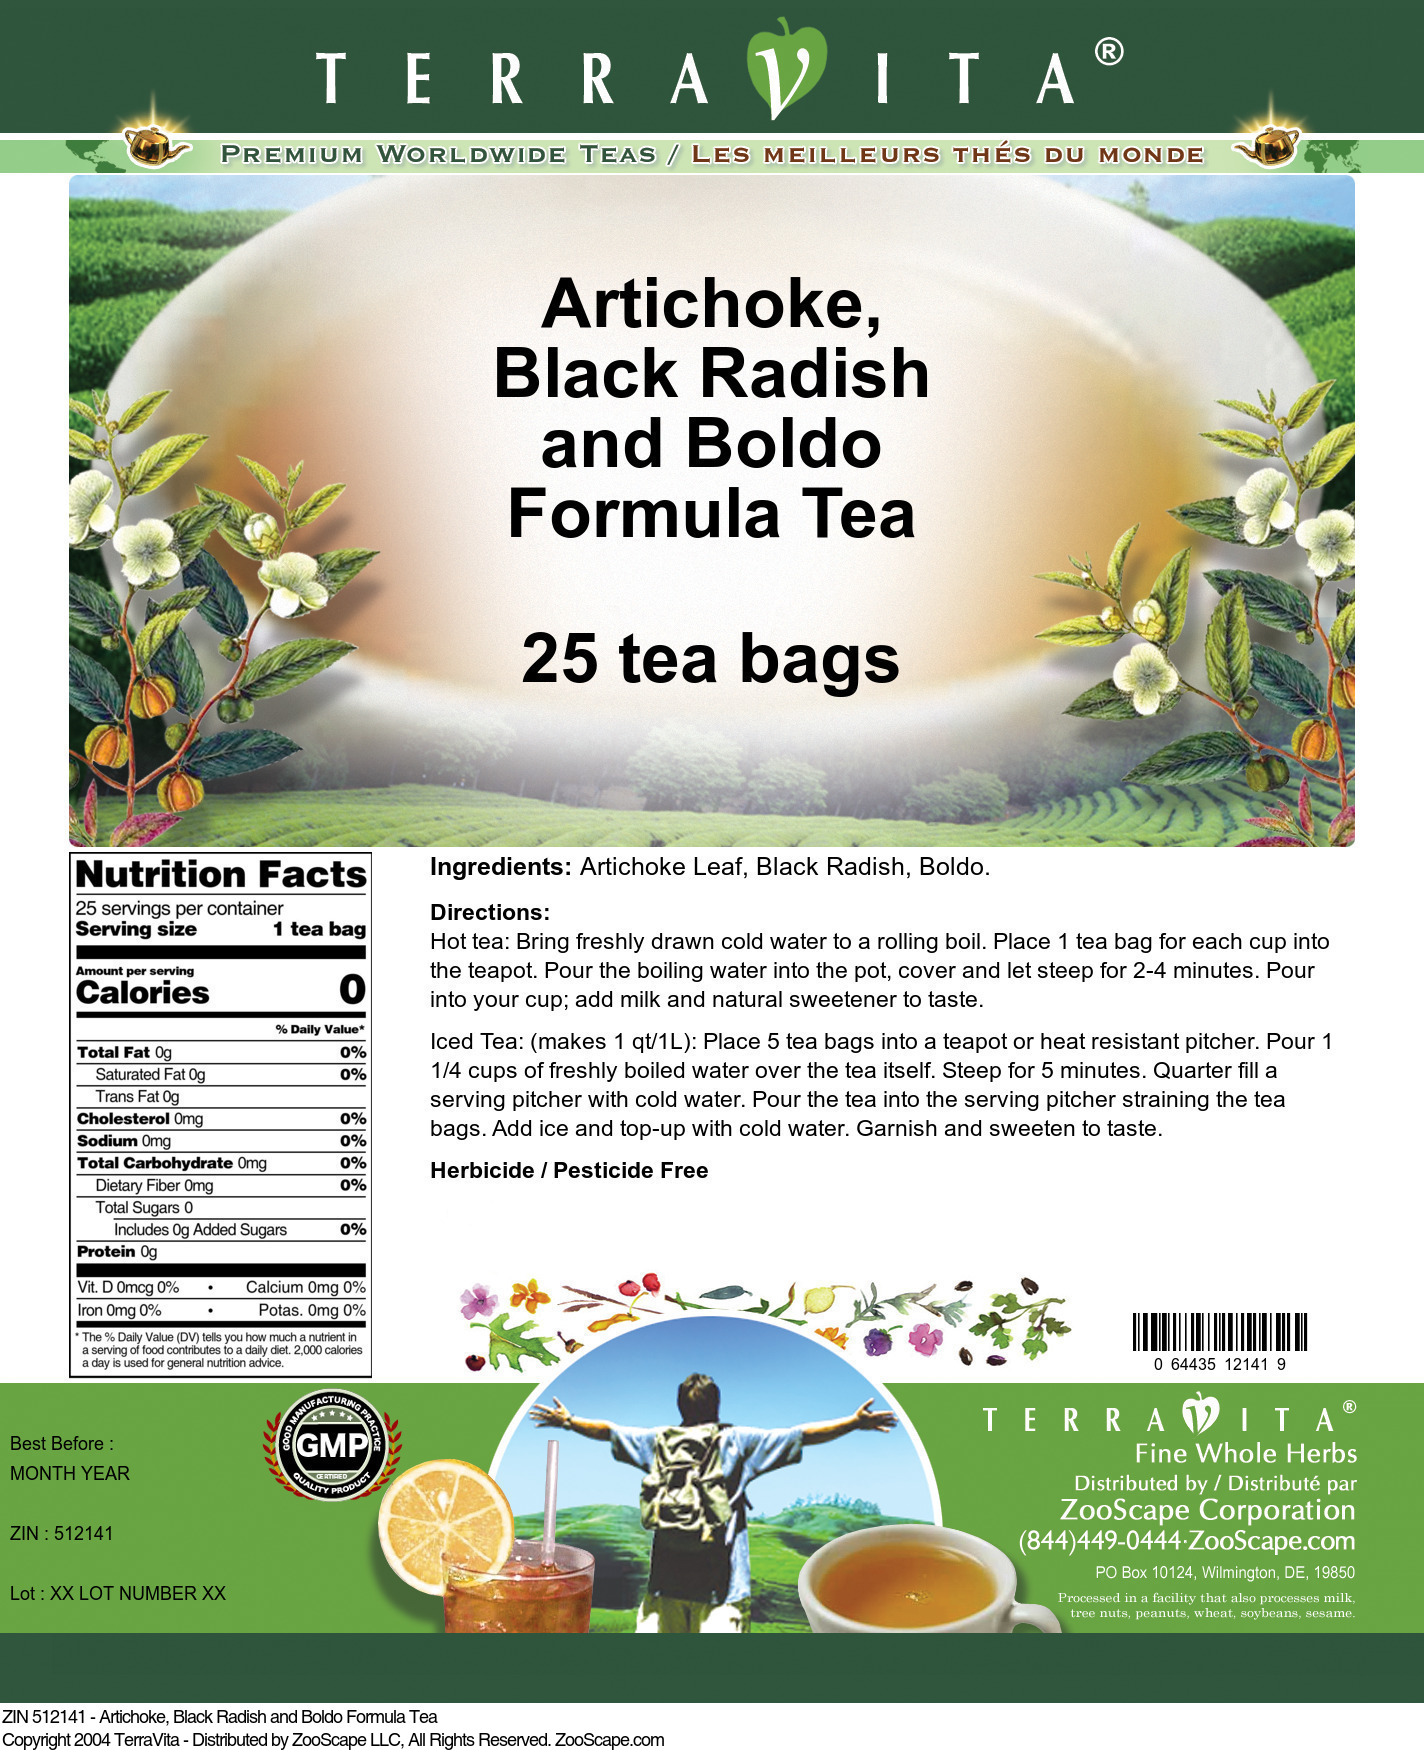 Artichoke, Black Radish and Bold Formula Tea - Label